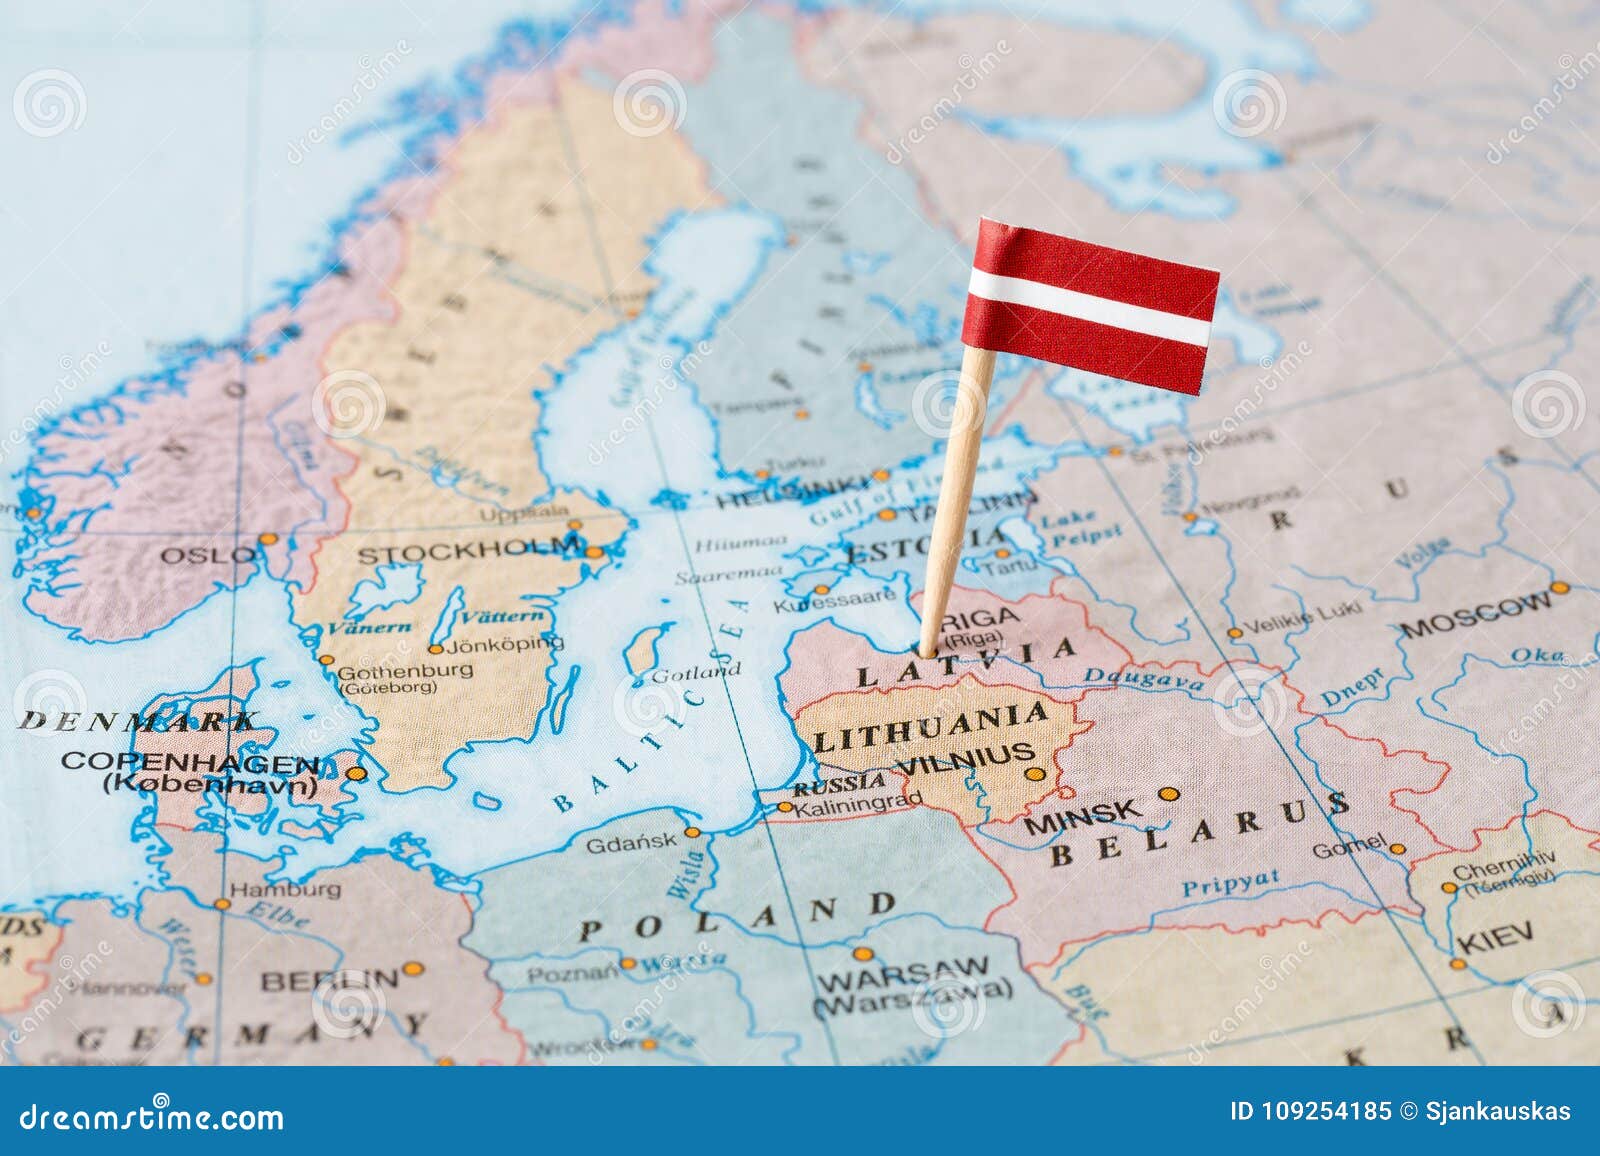 Latvia Flag Pin On Map Stock Image Image Of Destination 109254185